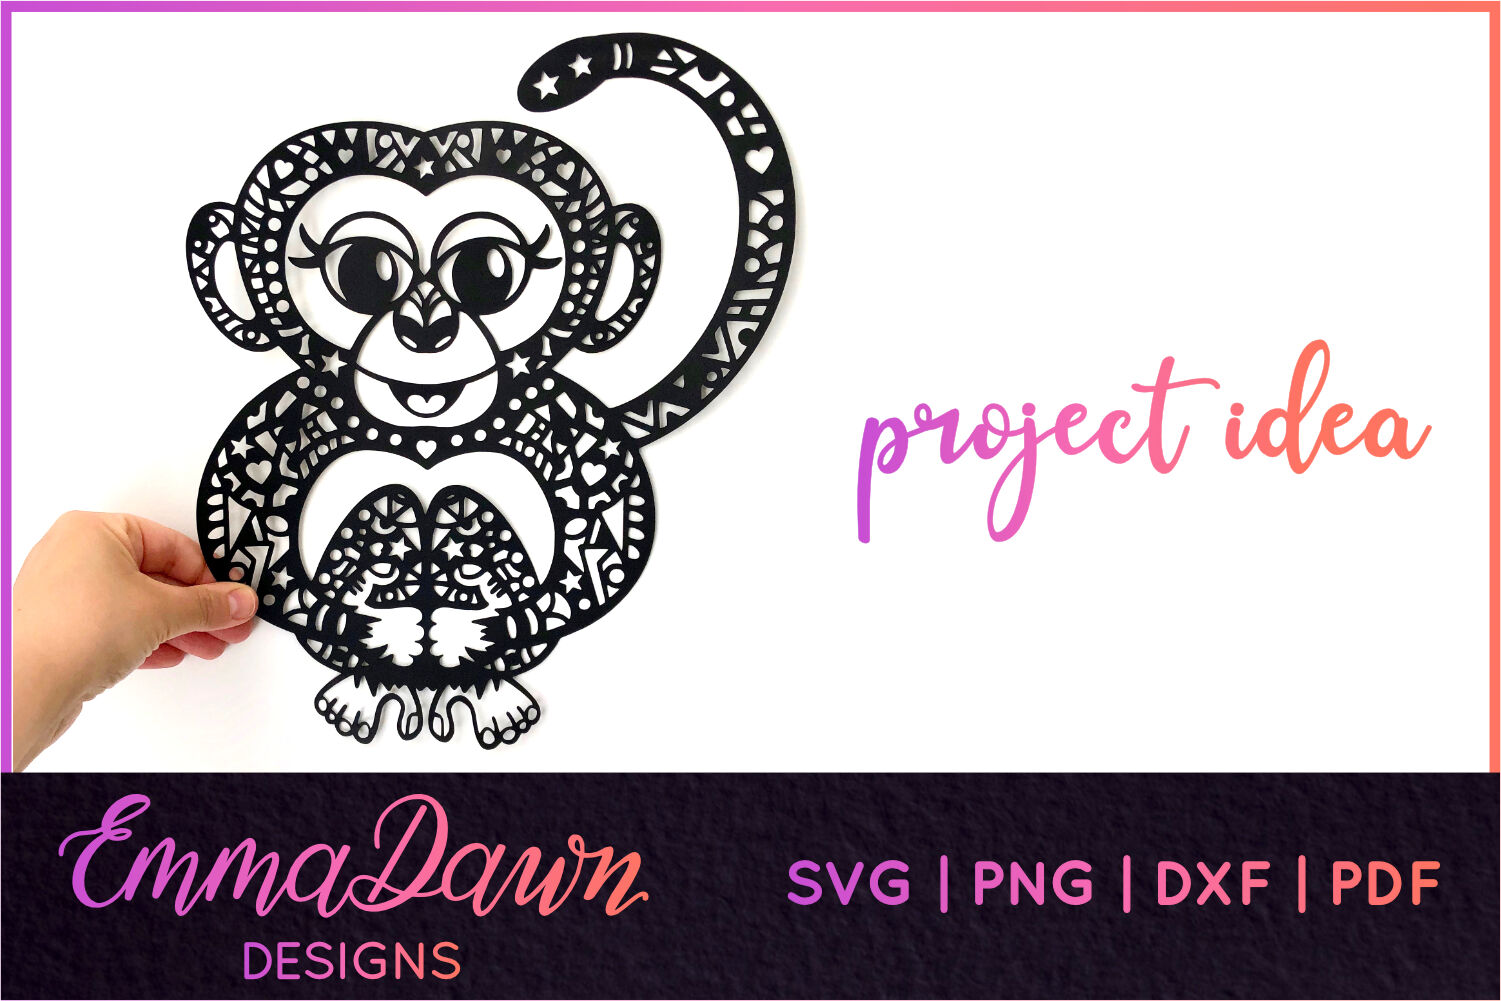 Download Marley The Monkey Mandala Zentangle 4 Designs Svg By Emma Dawn Designs Thehungryjpeg Com